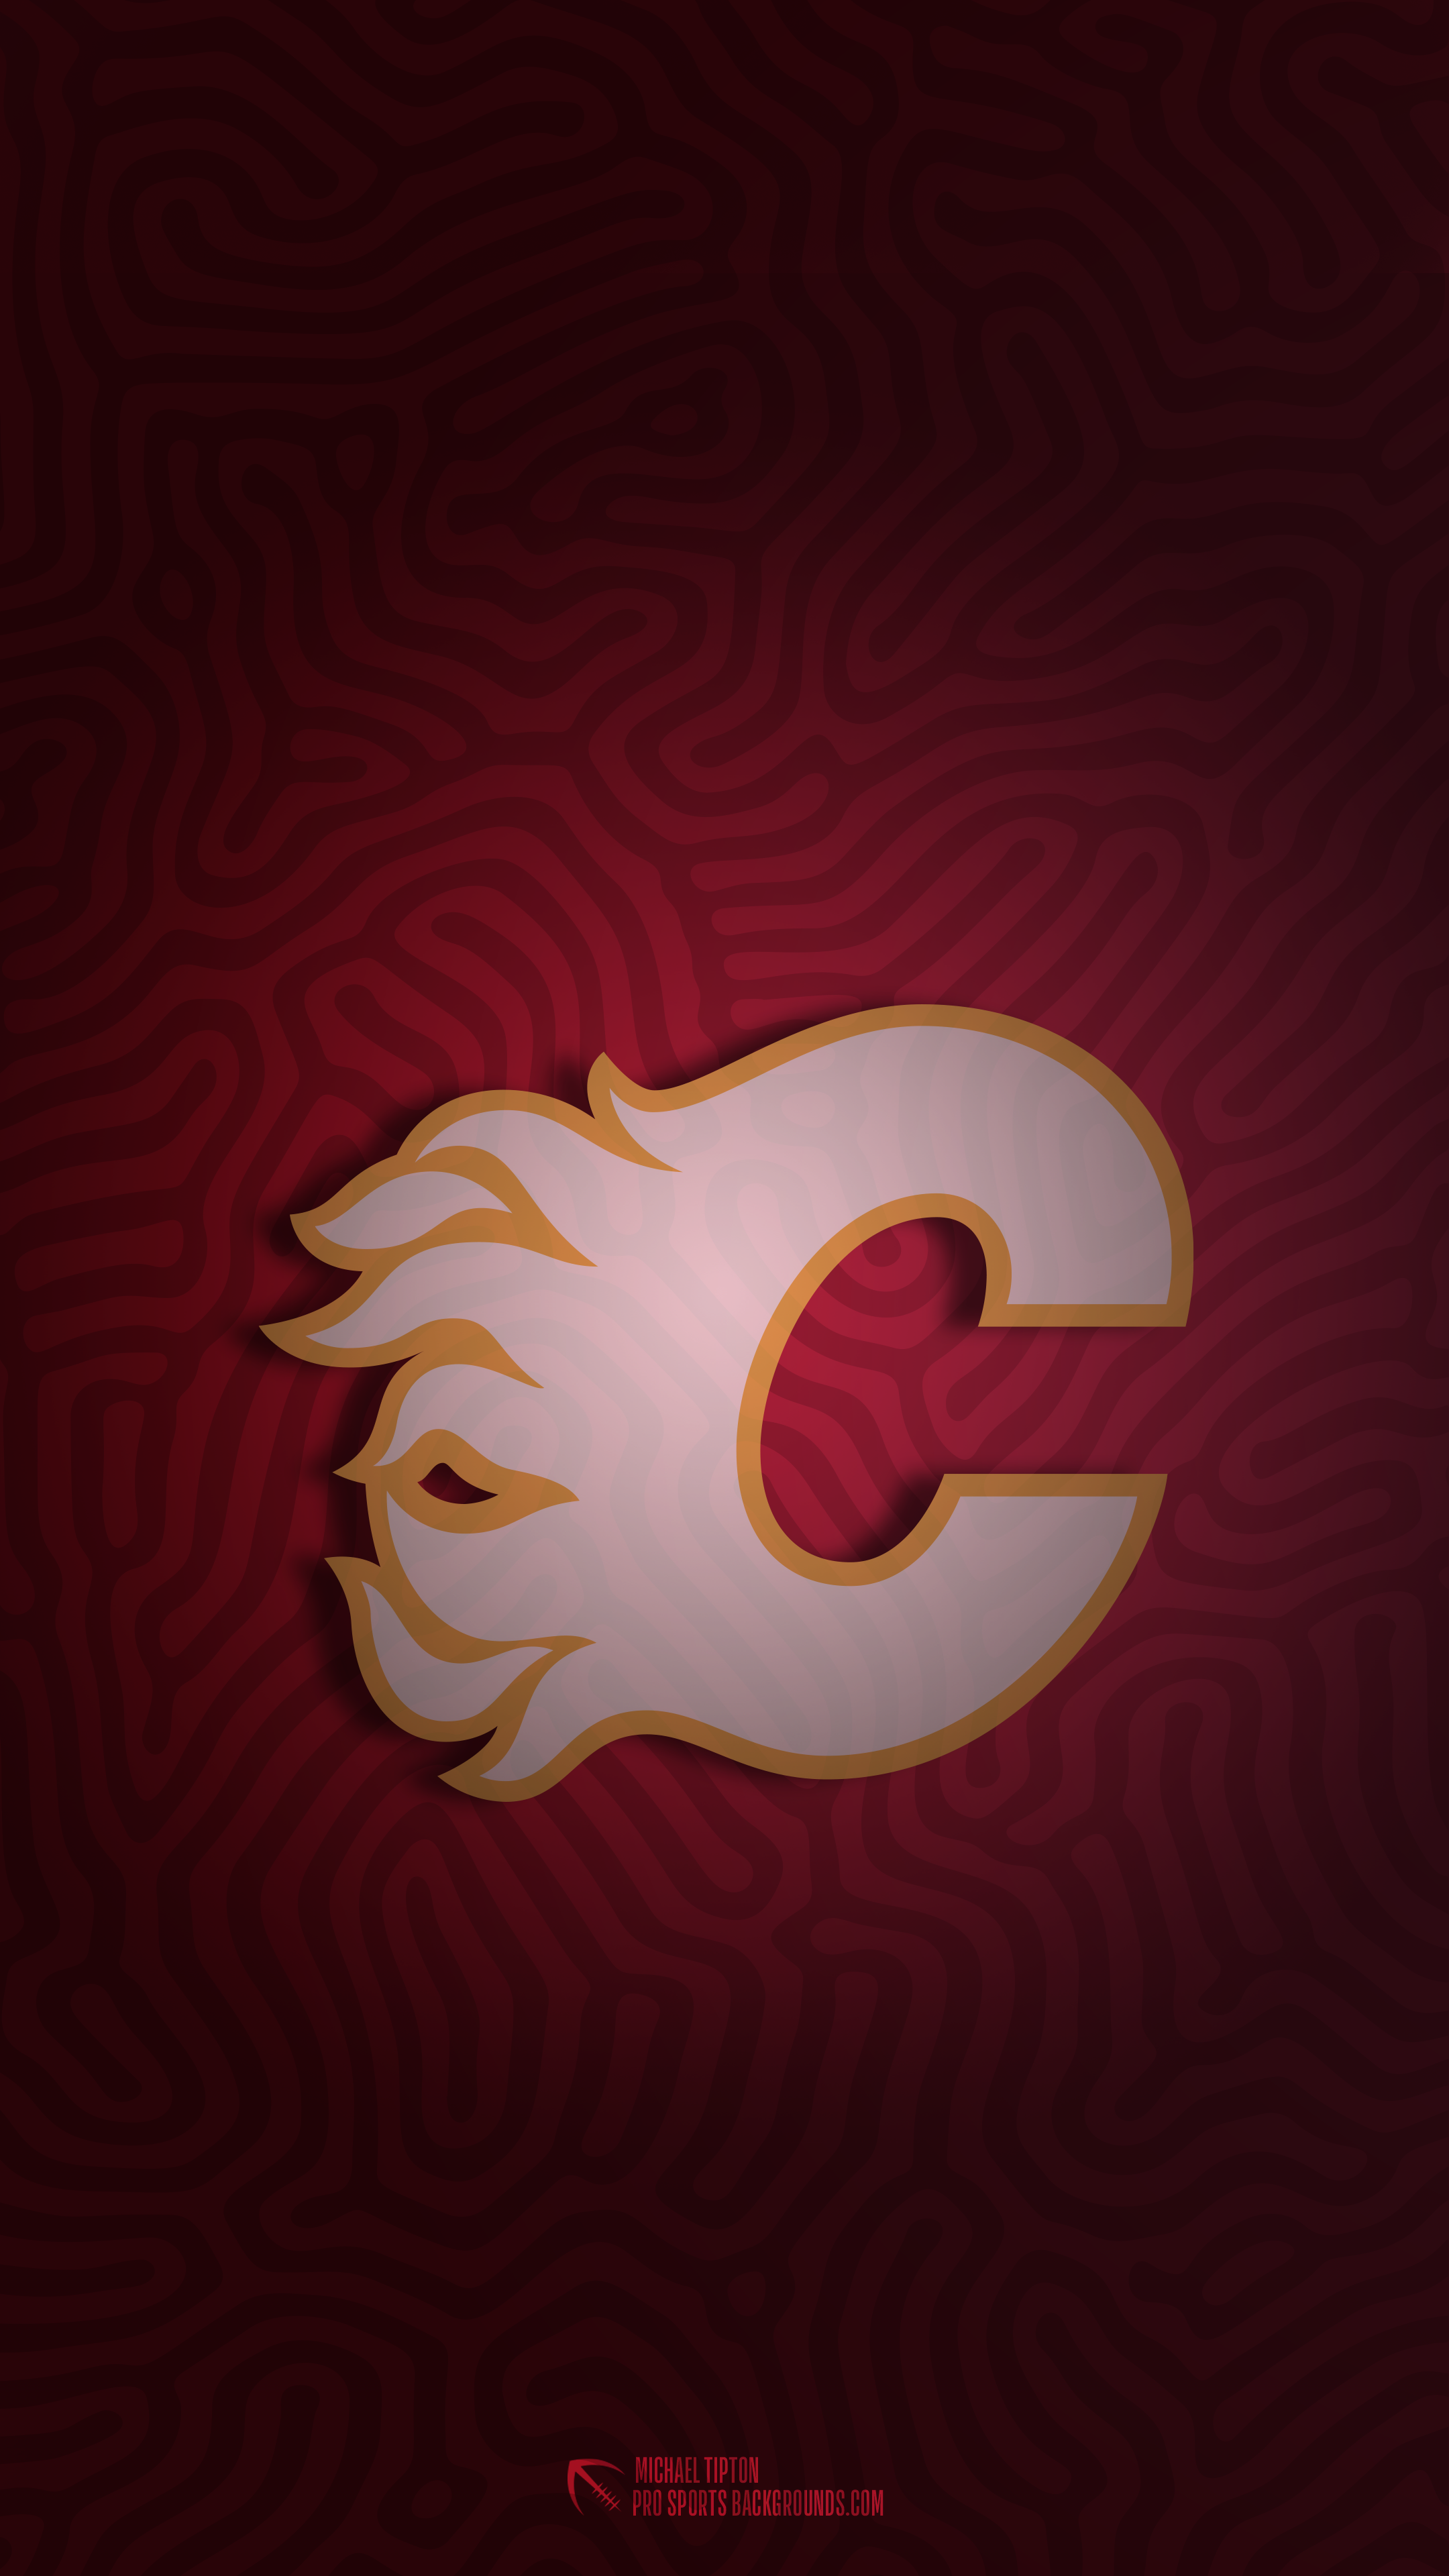 Calgary Flames 4K February schedule wallpapers for desktop and phones : r/ CalgaryFlames